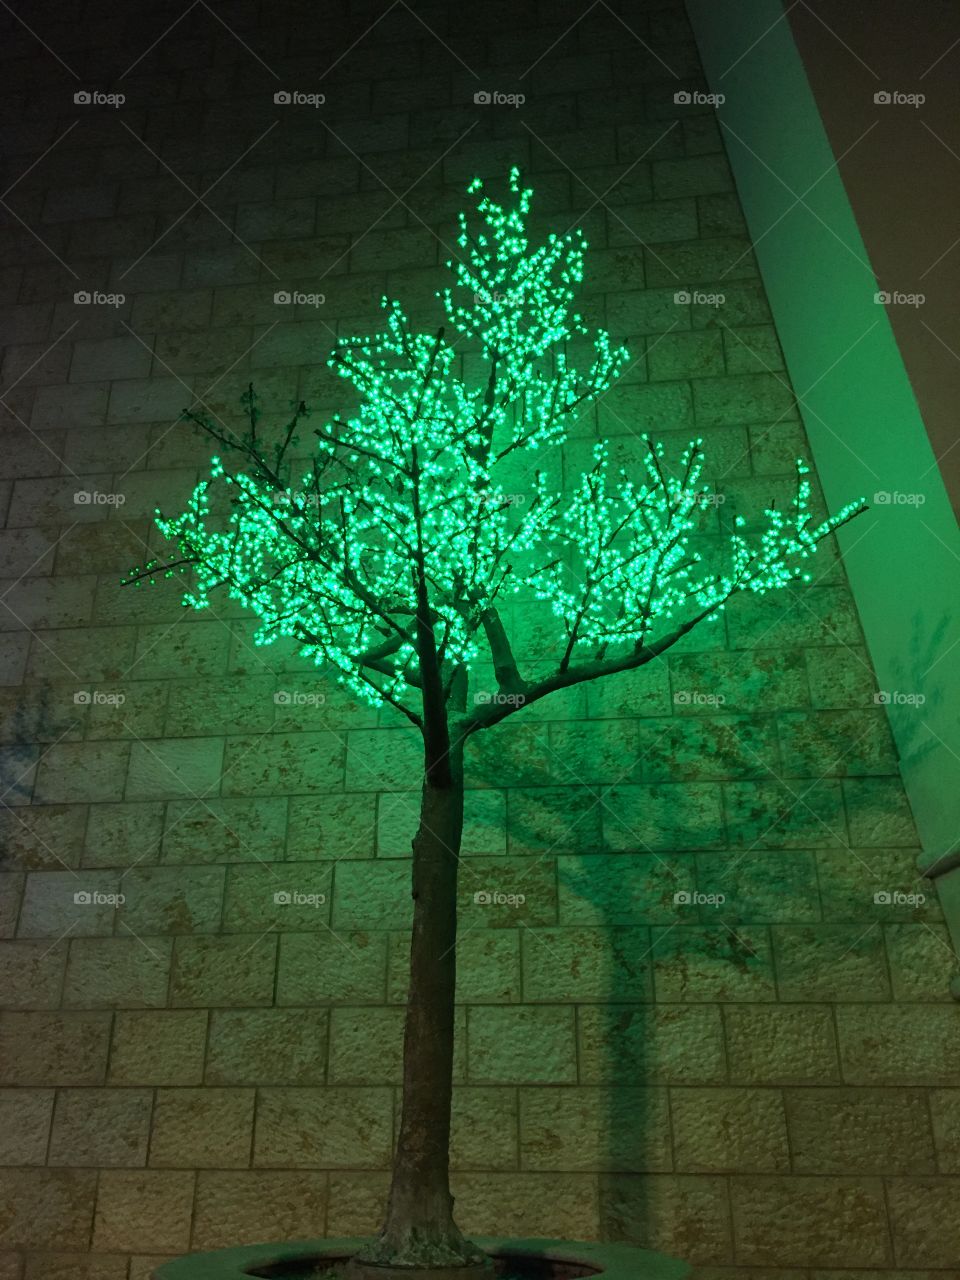 Green
Tree
Night
Light